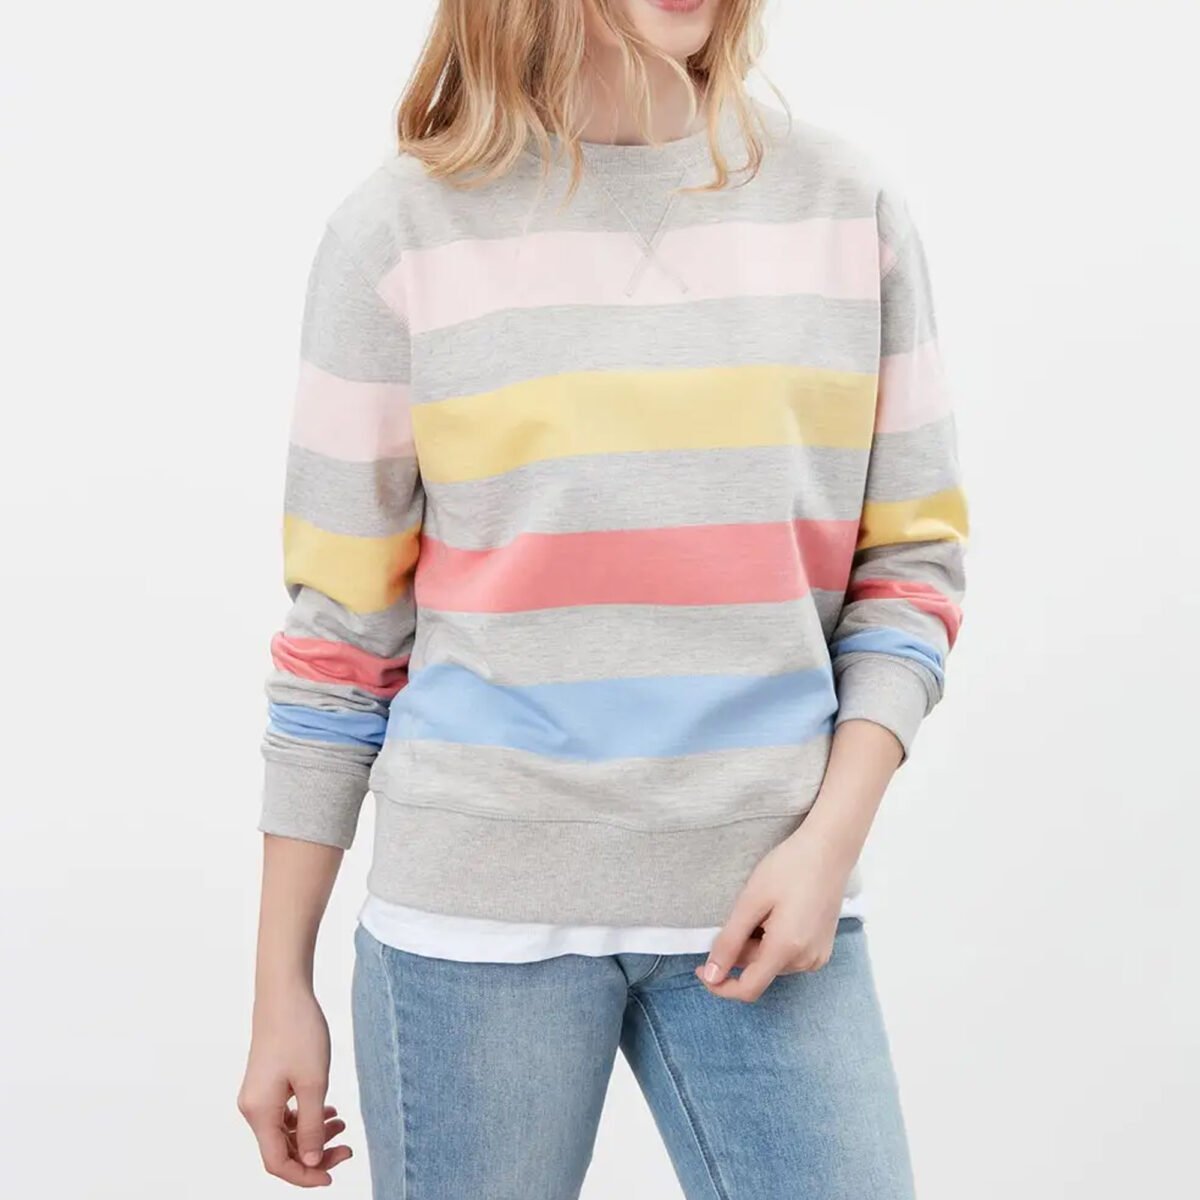 Colorful panels design sweatshirts